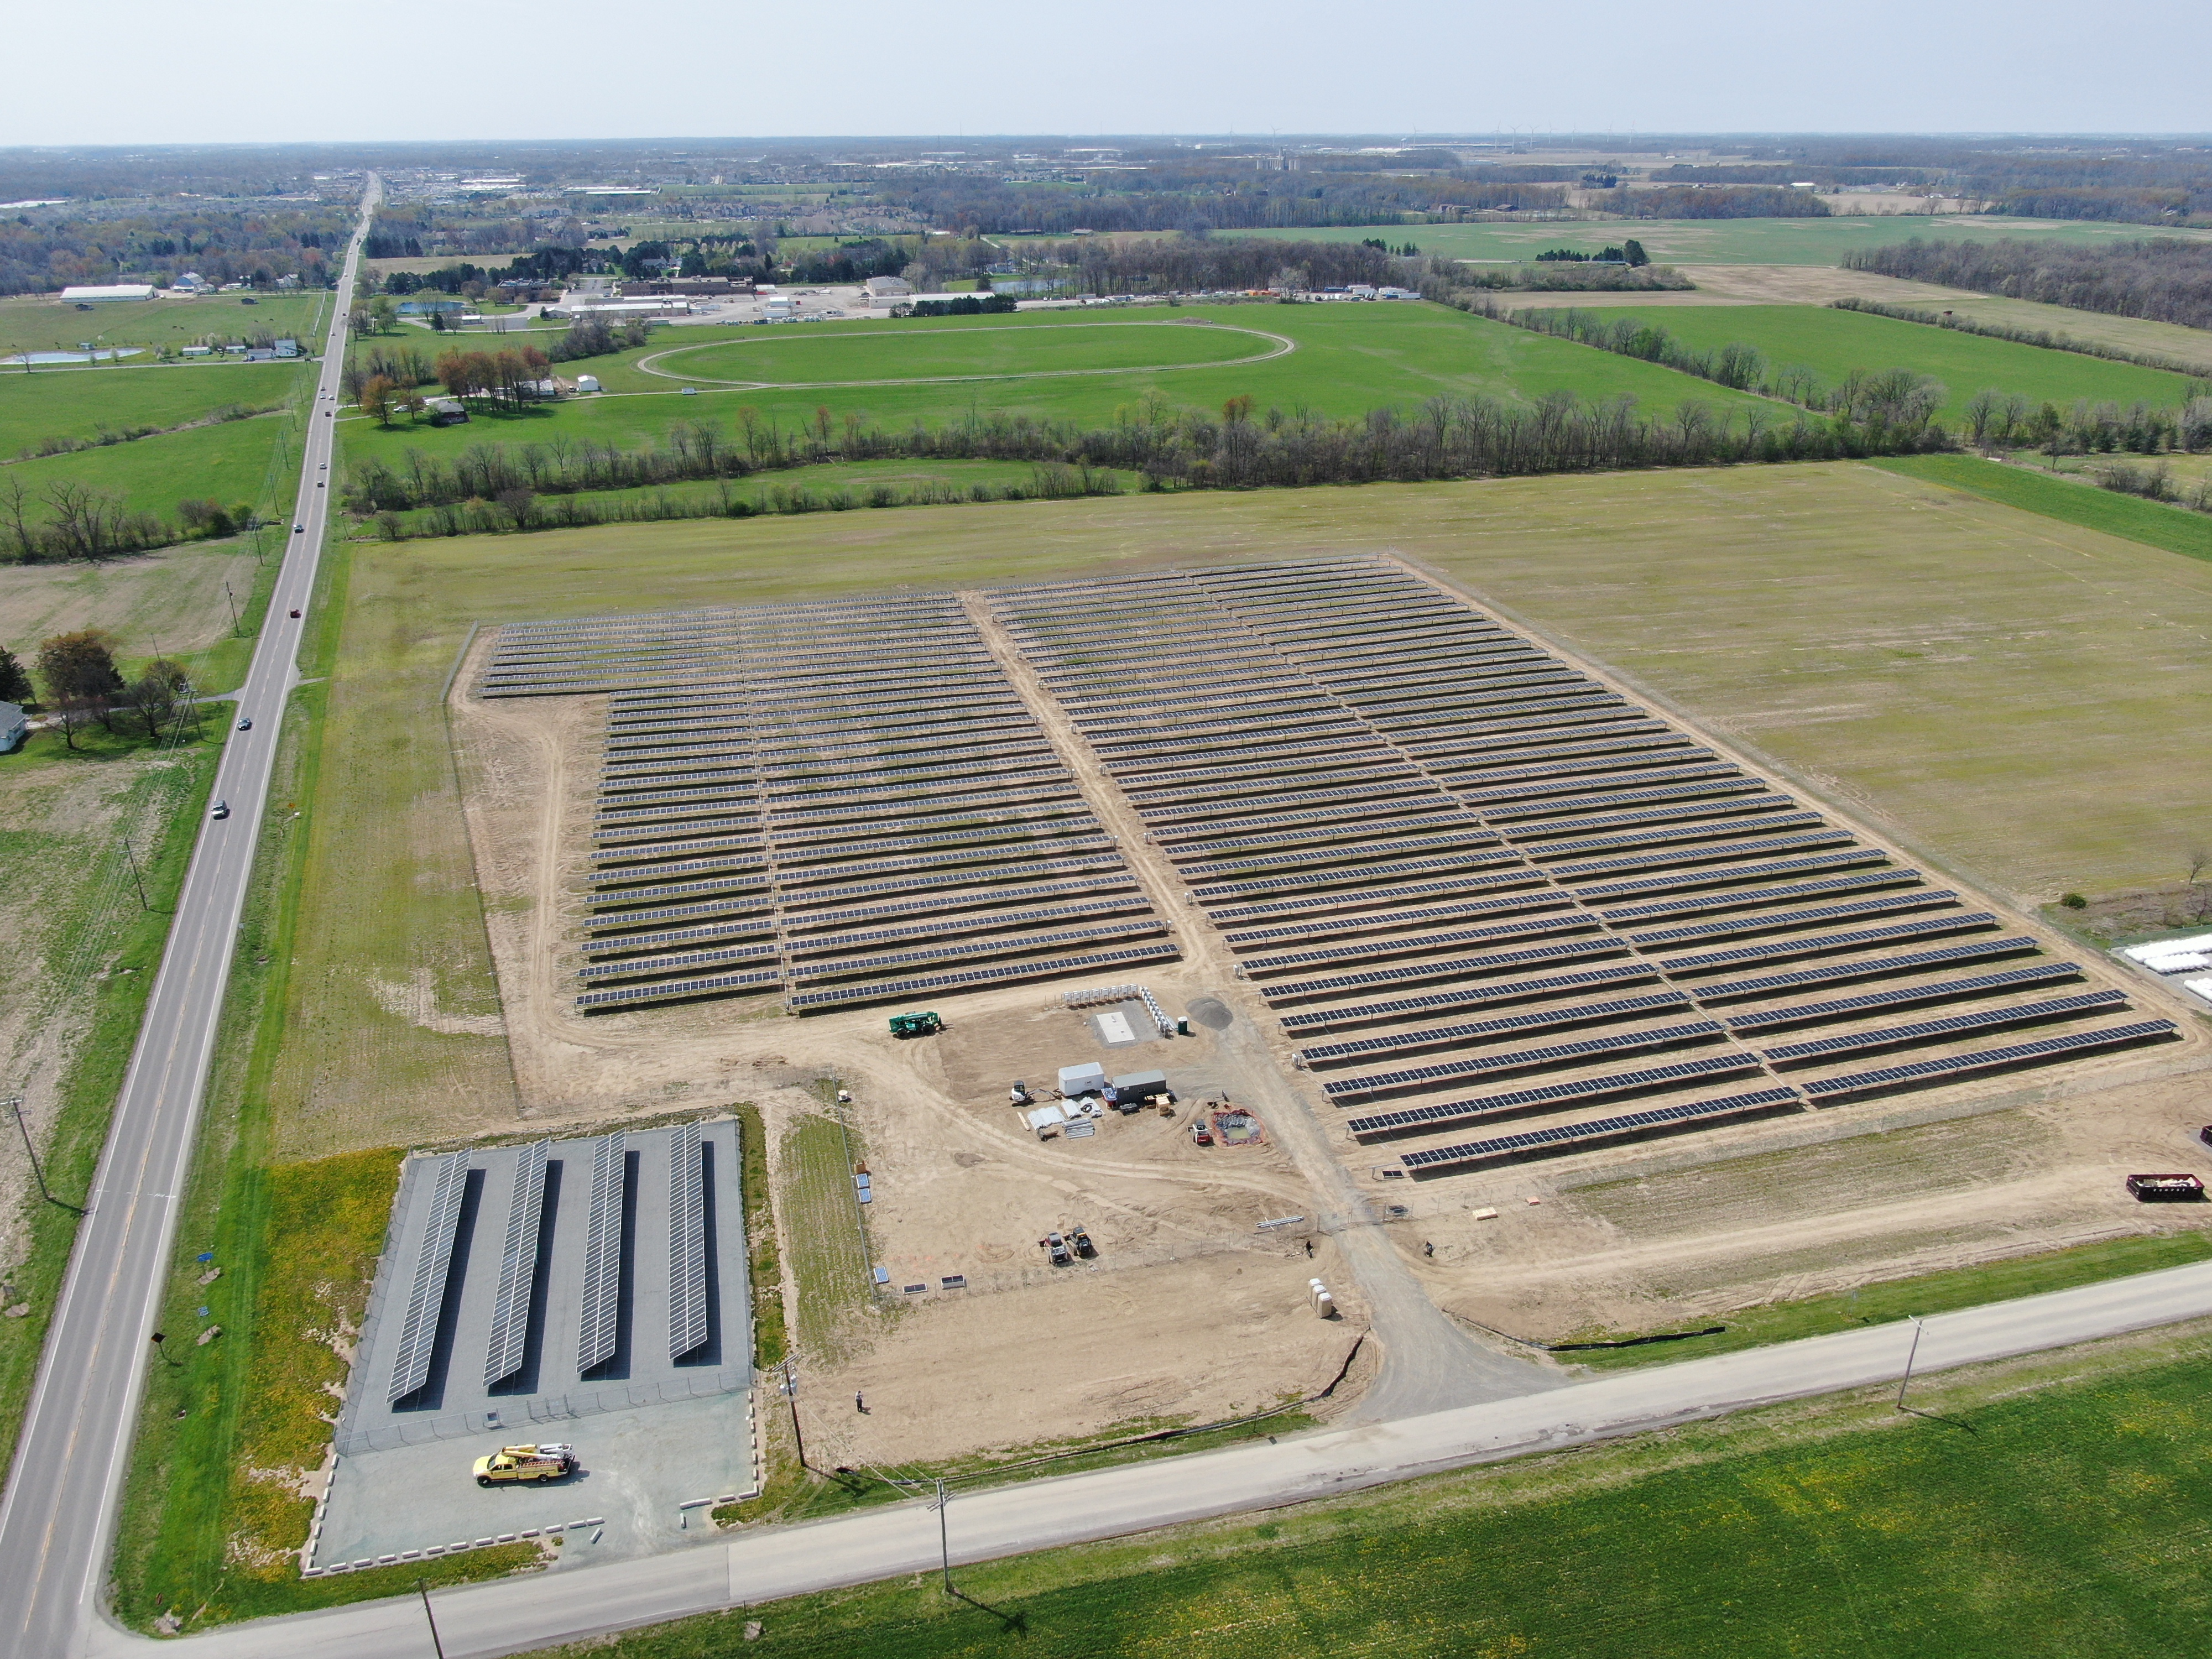 The new facility near Findlay, Ohio, adds 2.6 MW of alternative capacity to electric cooperatives’ energy portfolio, bringing total solar capacity to 4.7 MW.